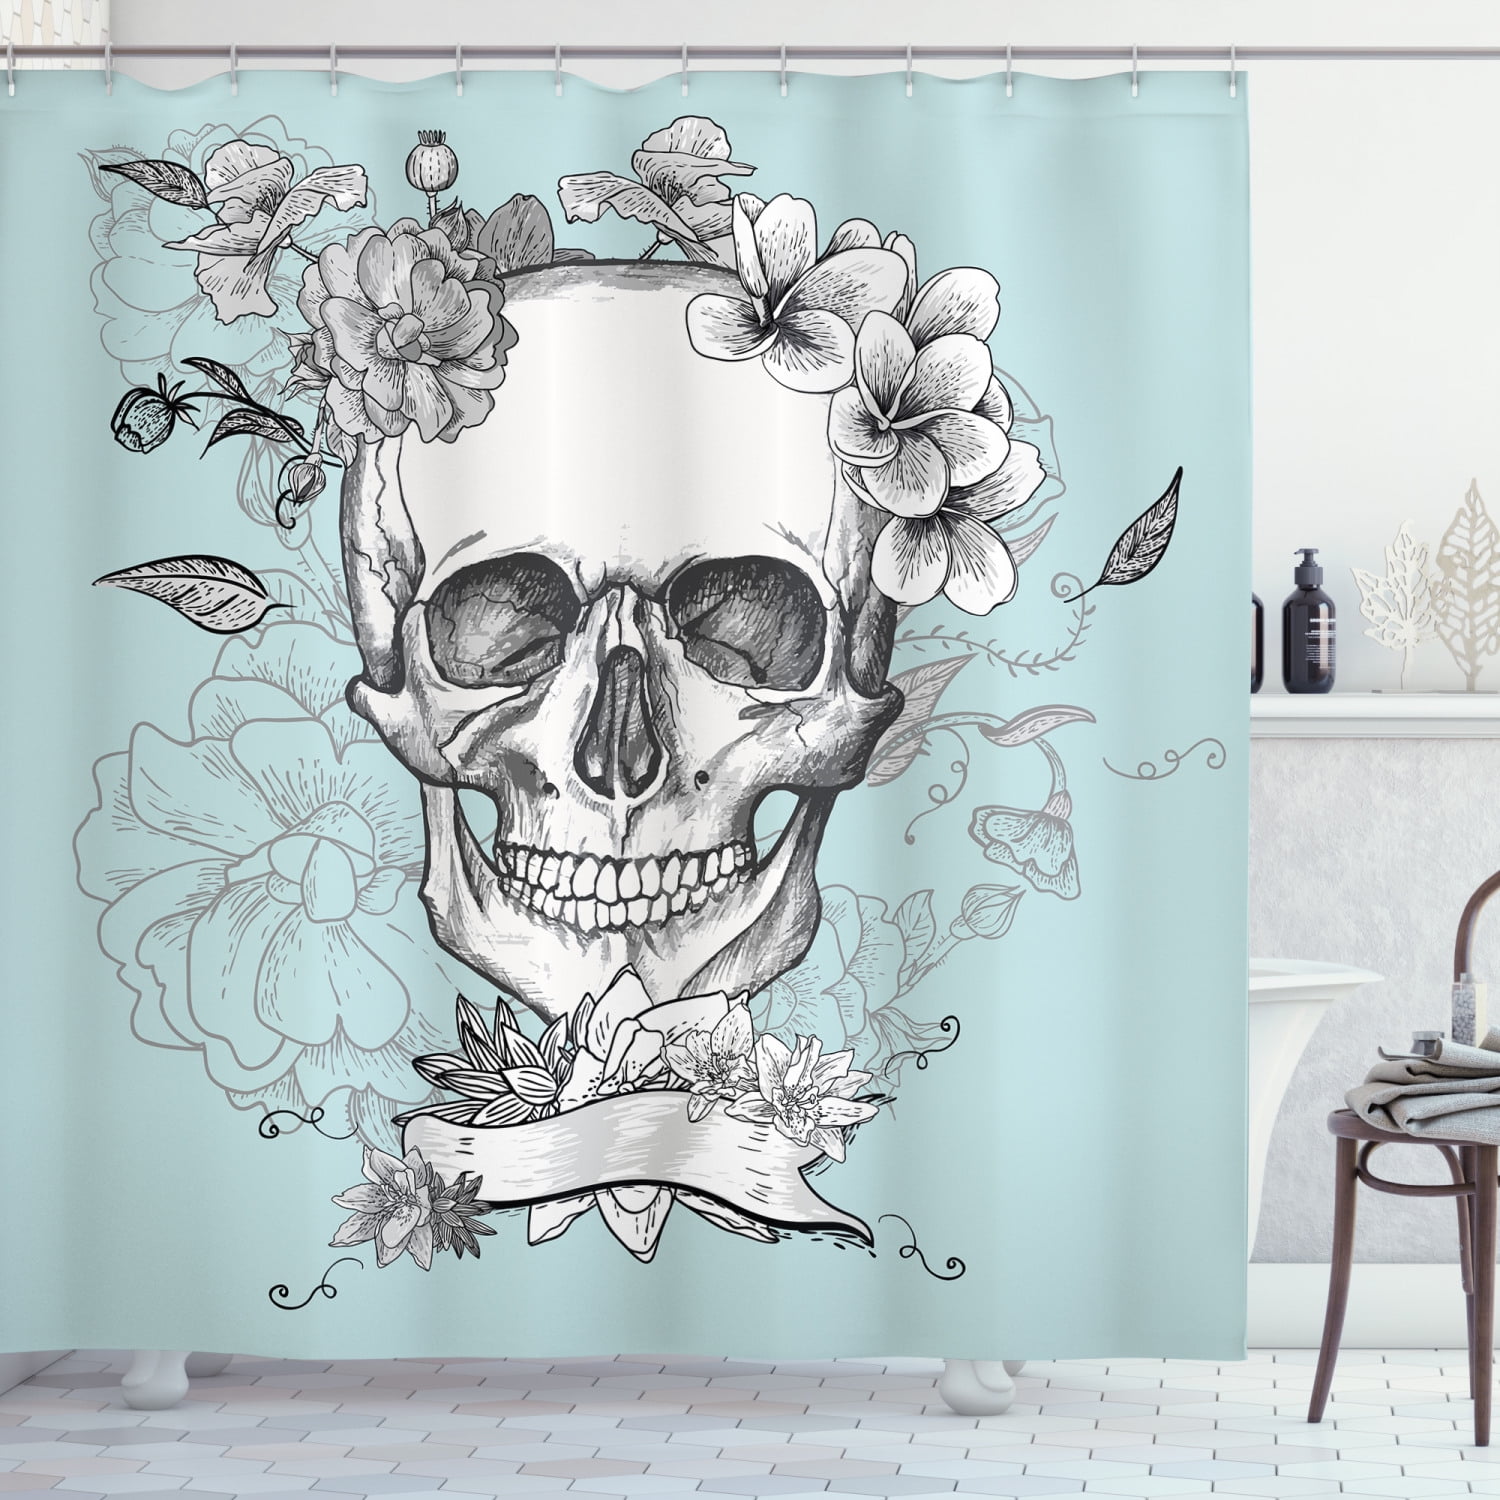 Harley's Revenge Waterproof Bath Polyester Shower Curtain Liner Water Resistant 